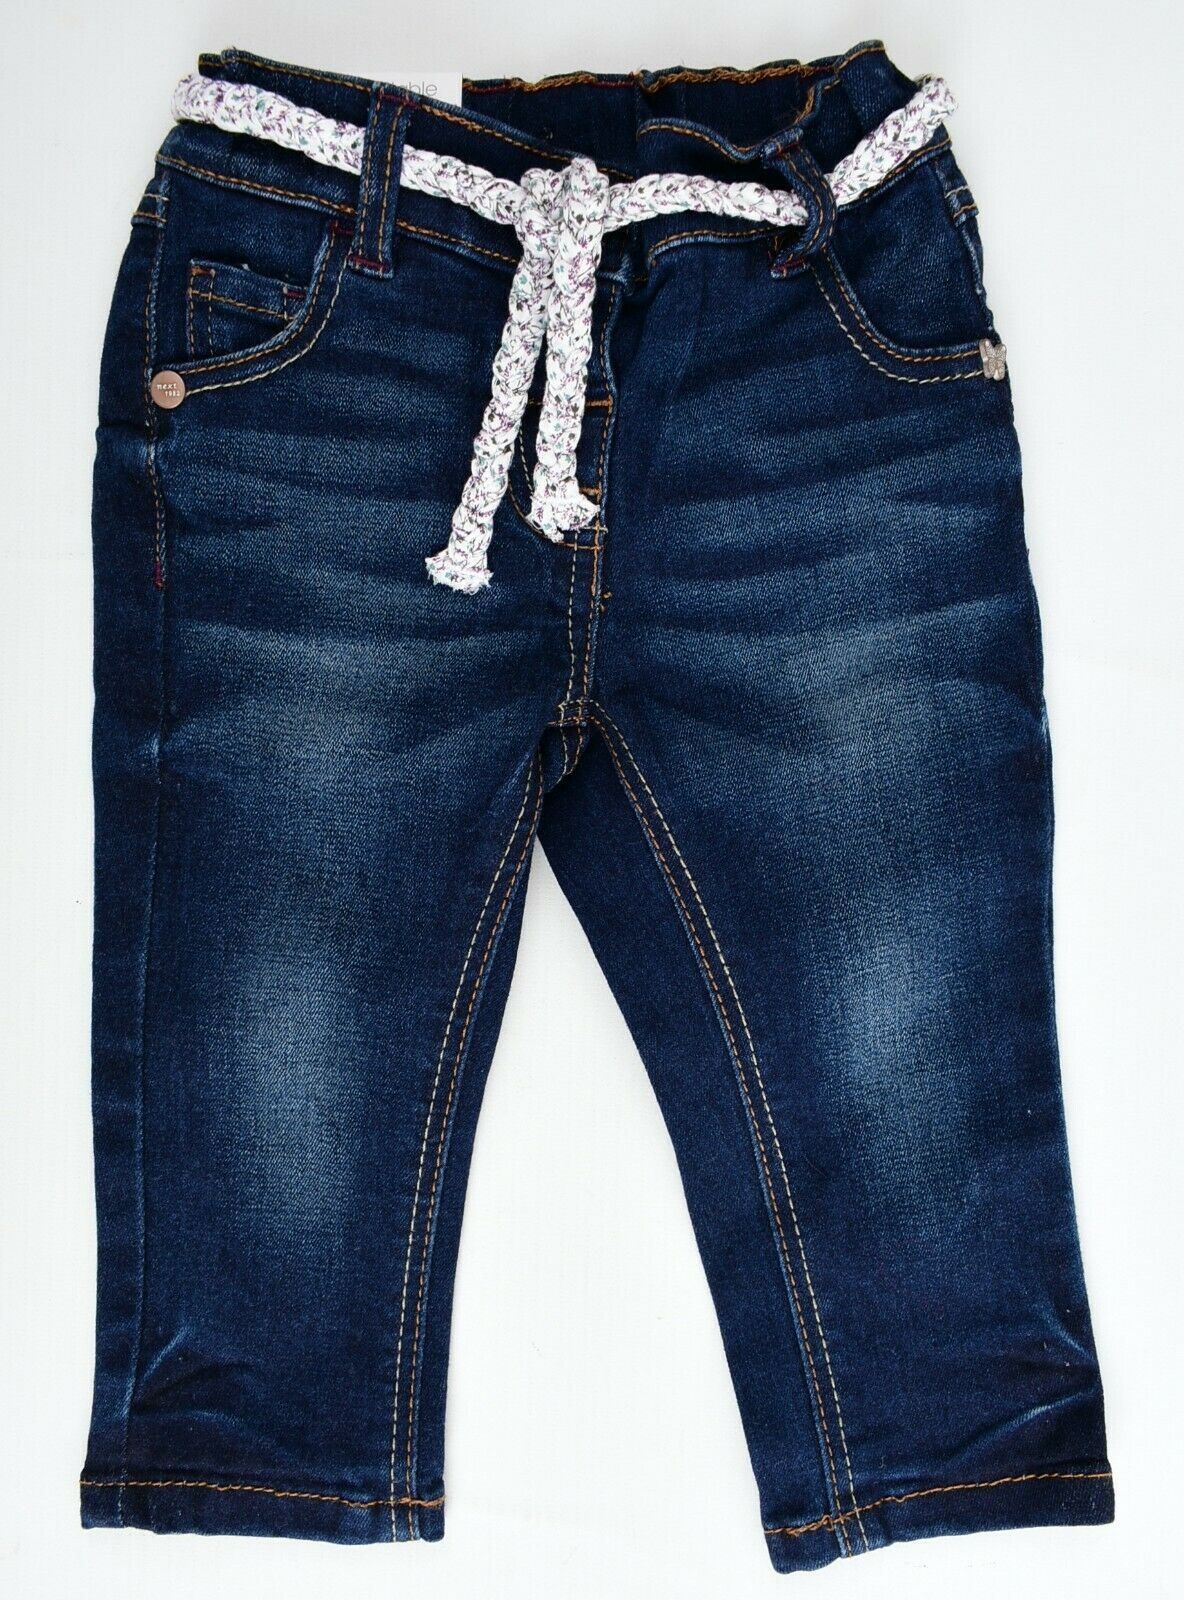 NEXT Bundle of 2x Baby Girls' Jeans, Light Blue/Dark Blue, size 6-9 months